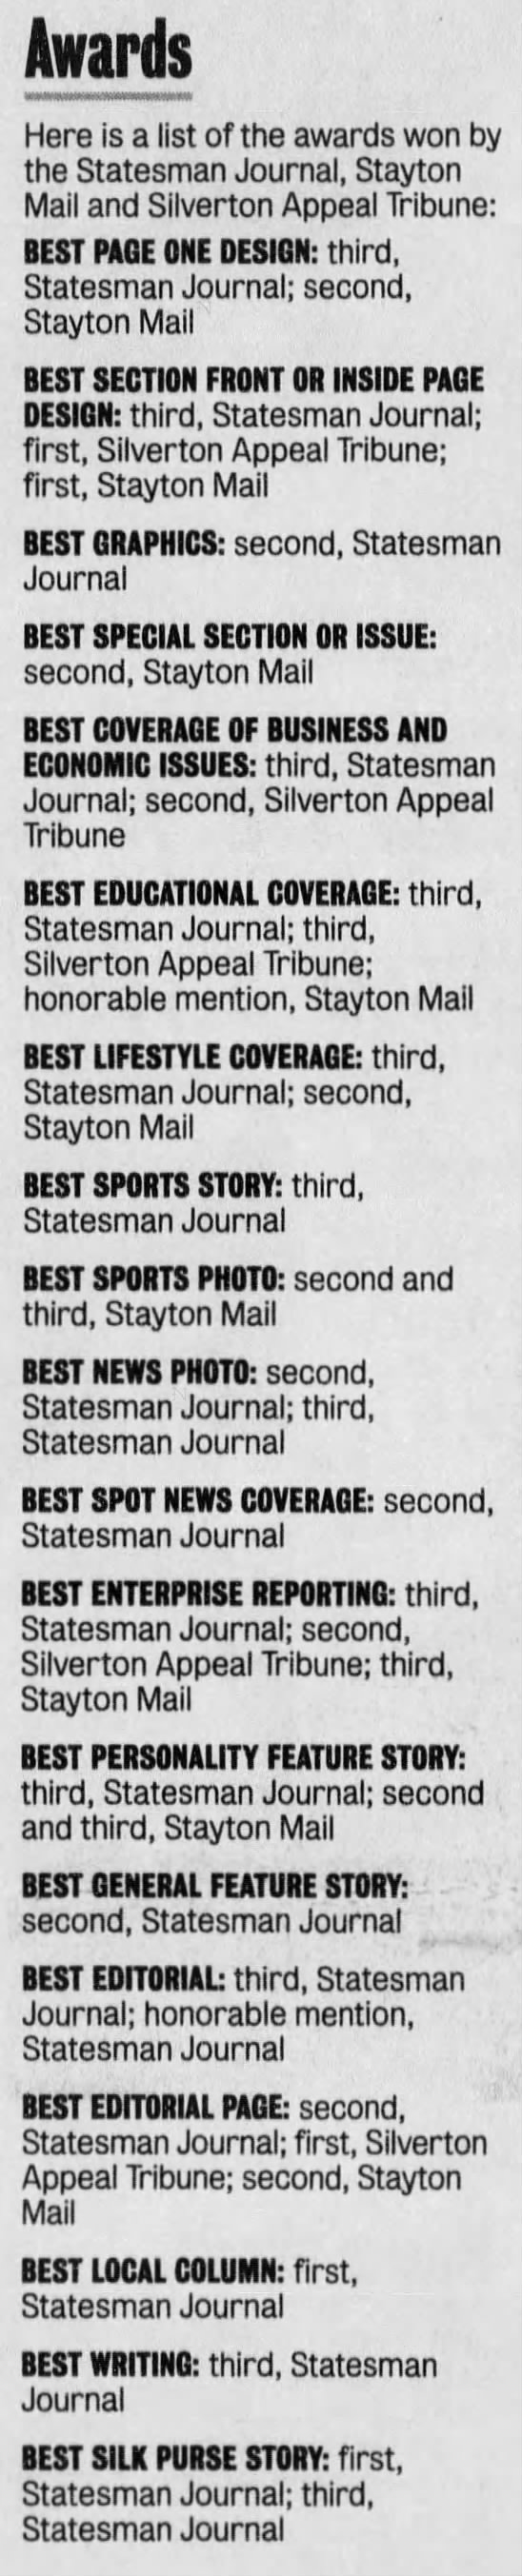 Awards Recognize Statesman Journal